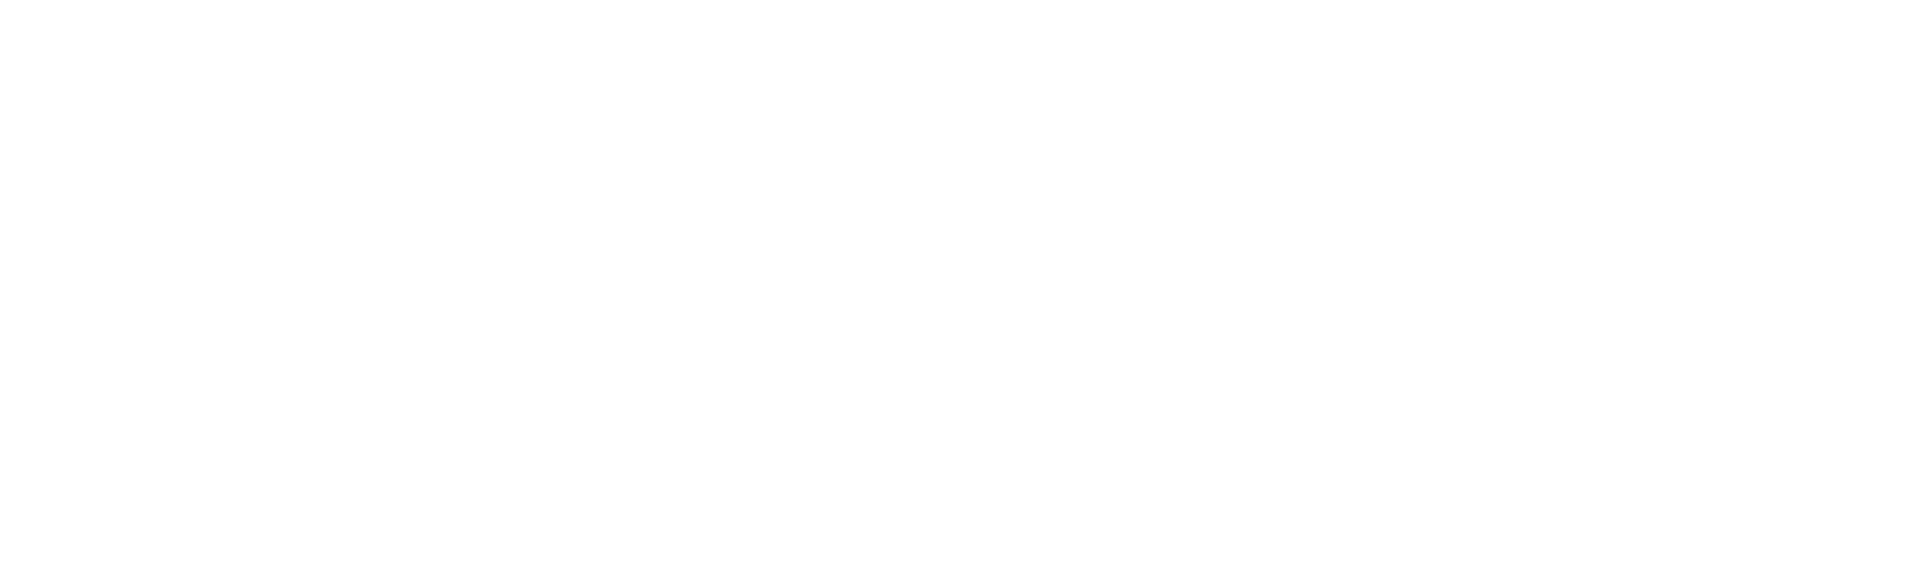 NANNIC Logo White Skin Care By Scienc CMYK